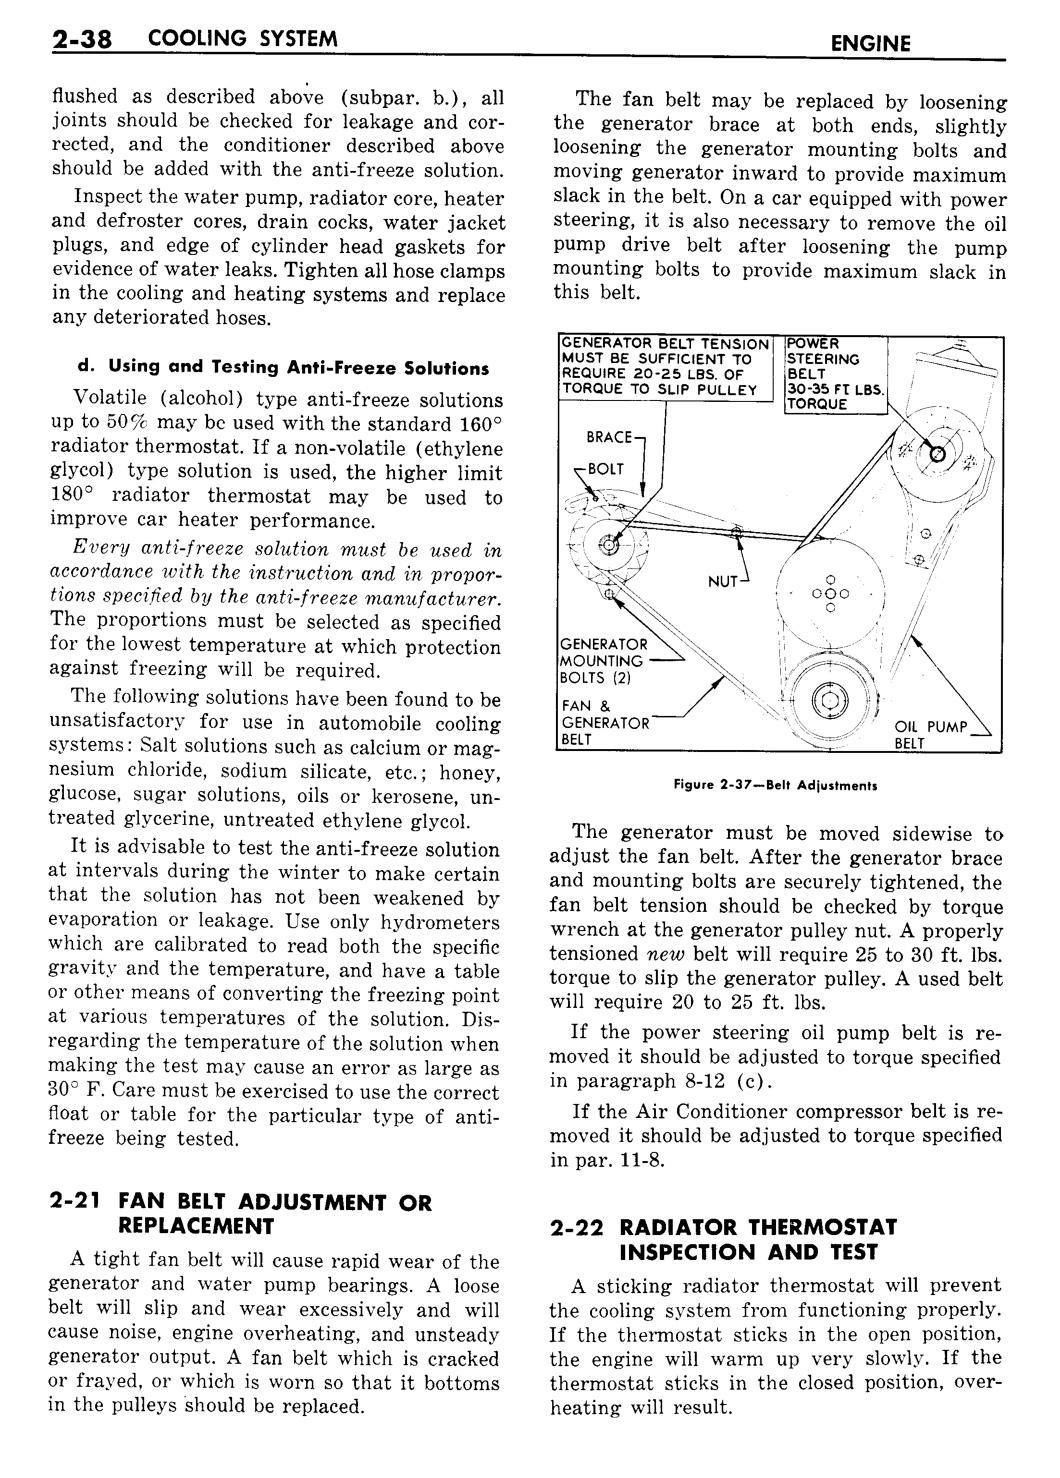 n_03 1957 Buick Shop Manual - Engine-038-038.jpg